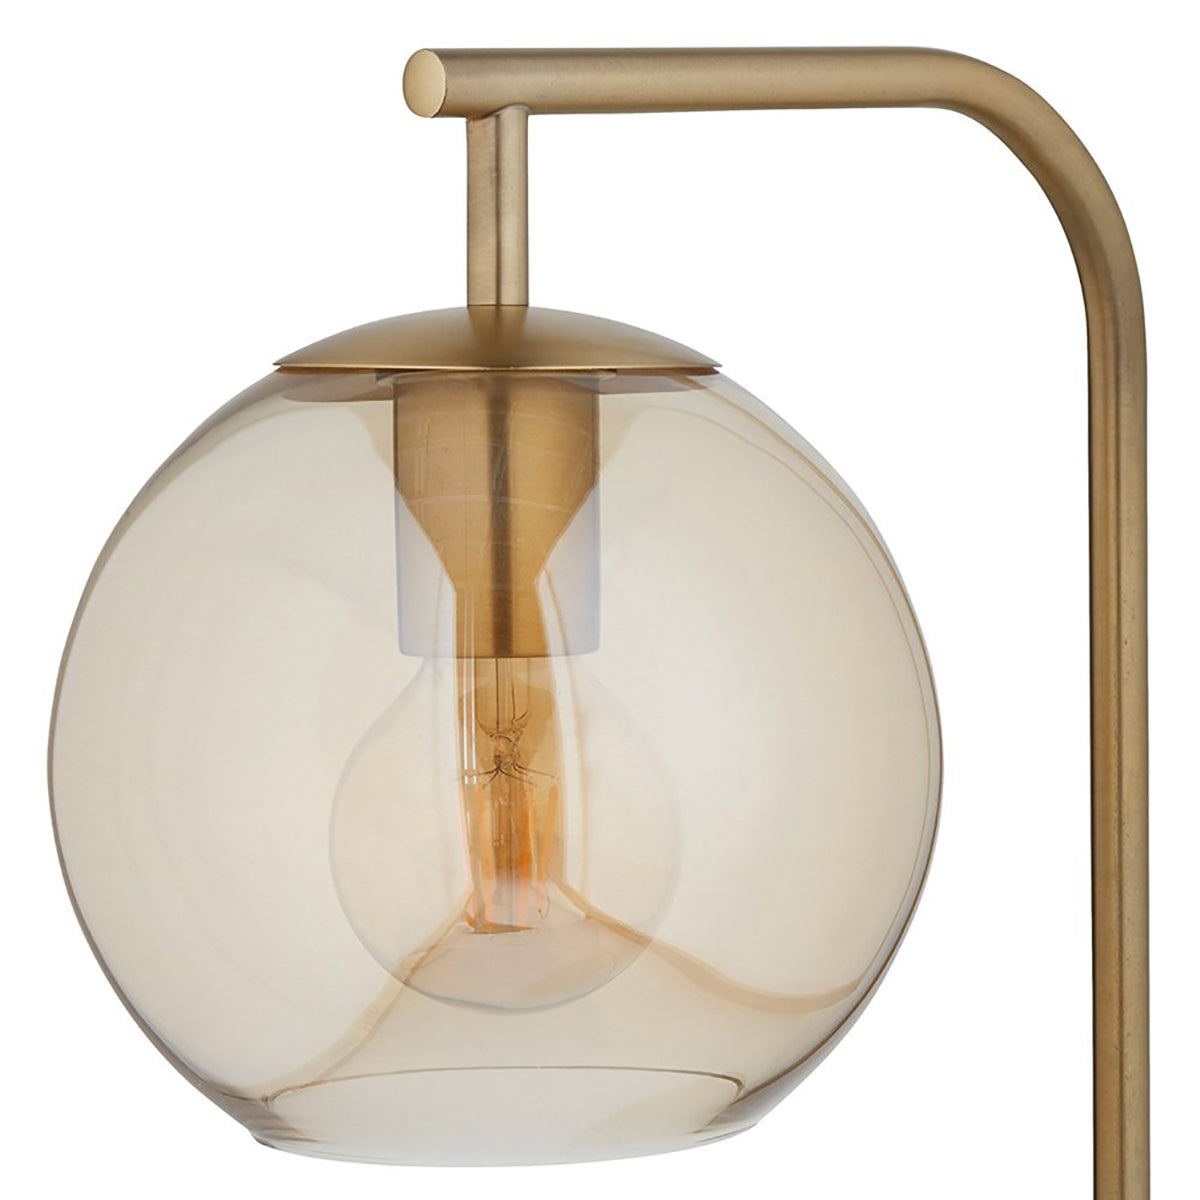 Globe Floor Lamp